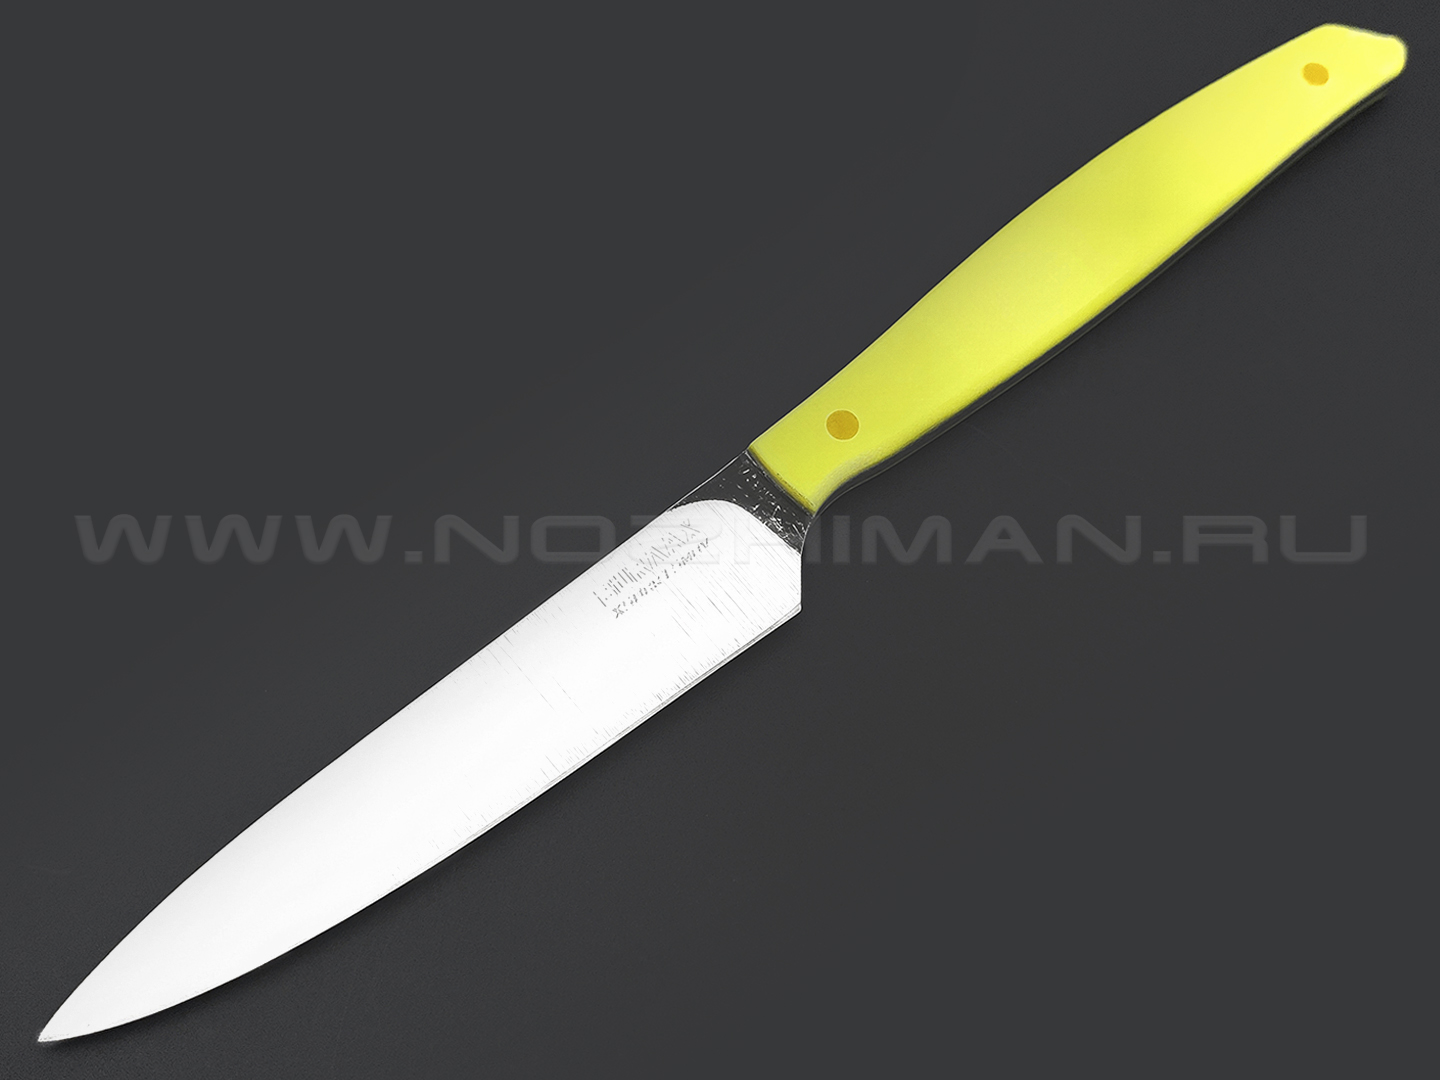 Кухонный нож Burlax BX0104 сталь x50Cr15MoV, рукоять G10 yellow